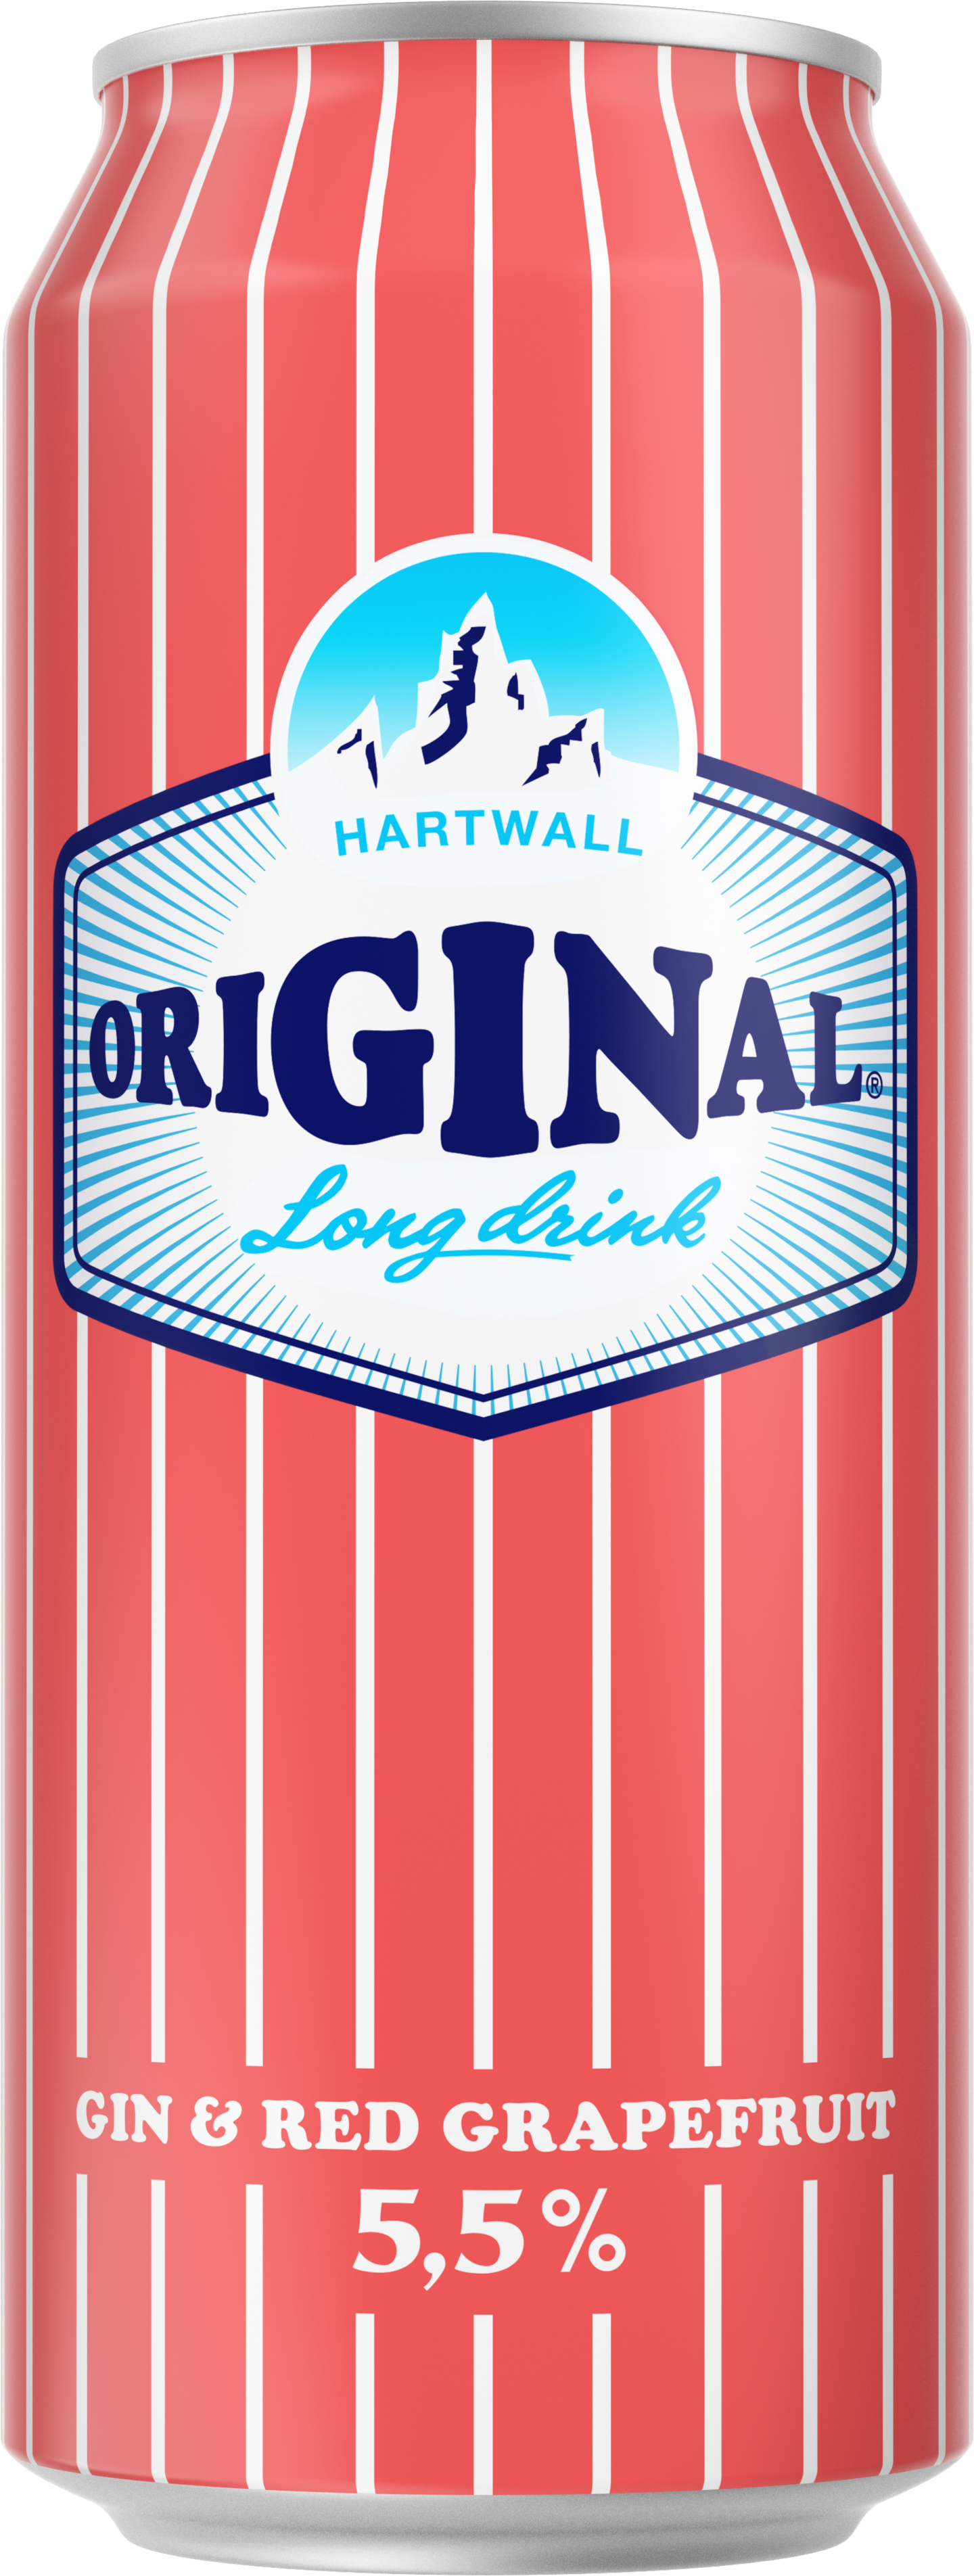 Hartwall Original Long Drink Red Grapefruit 5,5% 0,5l